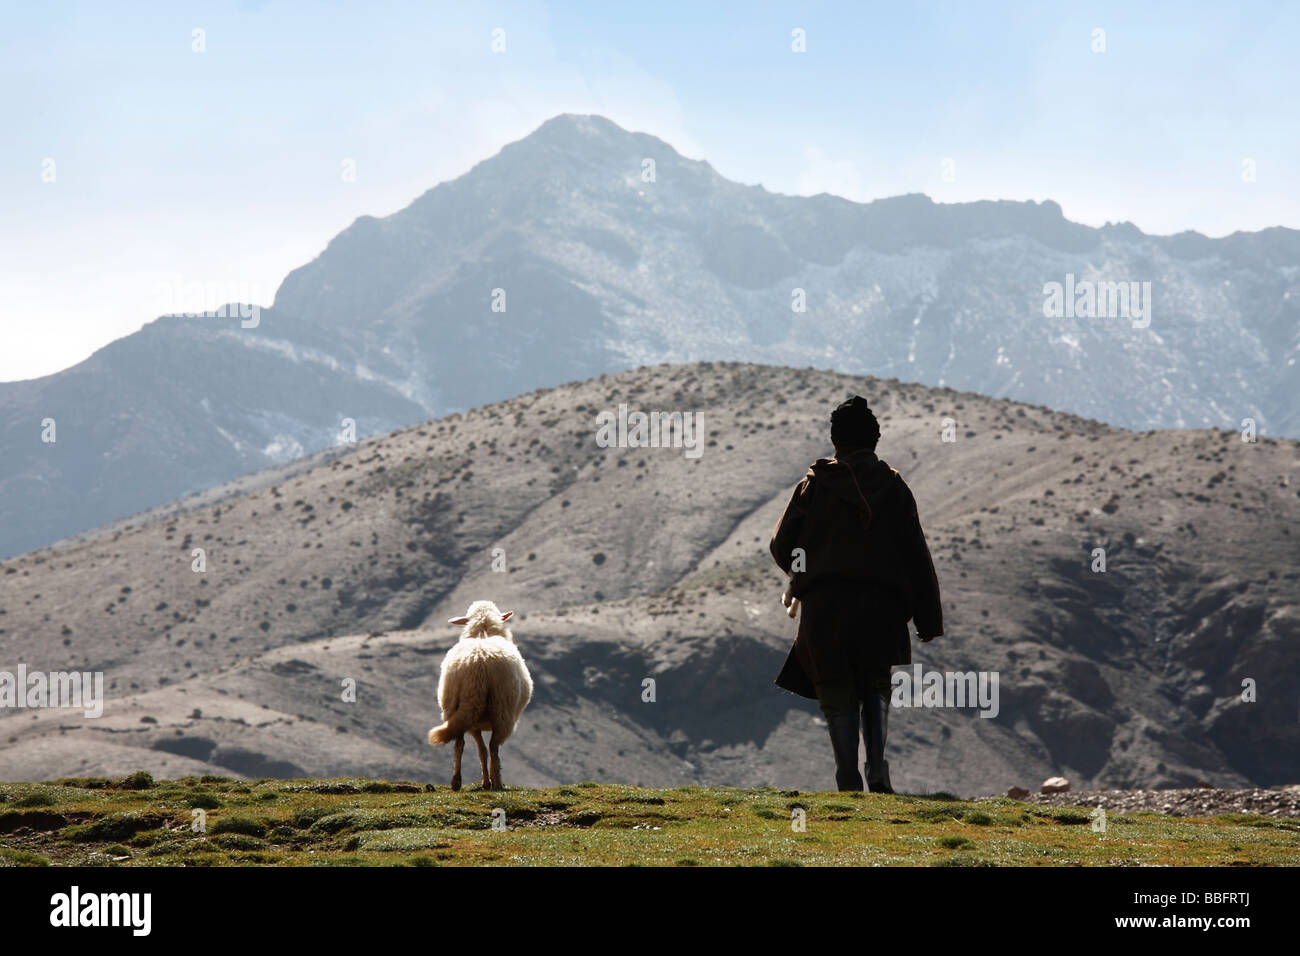 Africa, North Africa, Morocco, Atlas Mountains, Terraced Fields, Tizi n Tichka, Shepherd Tending Sheep and her Lamb Stock Photo